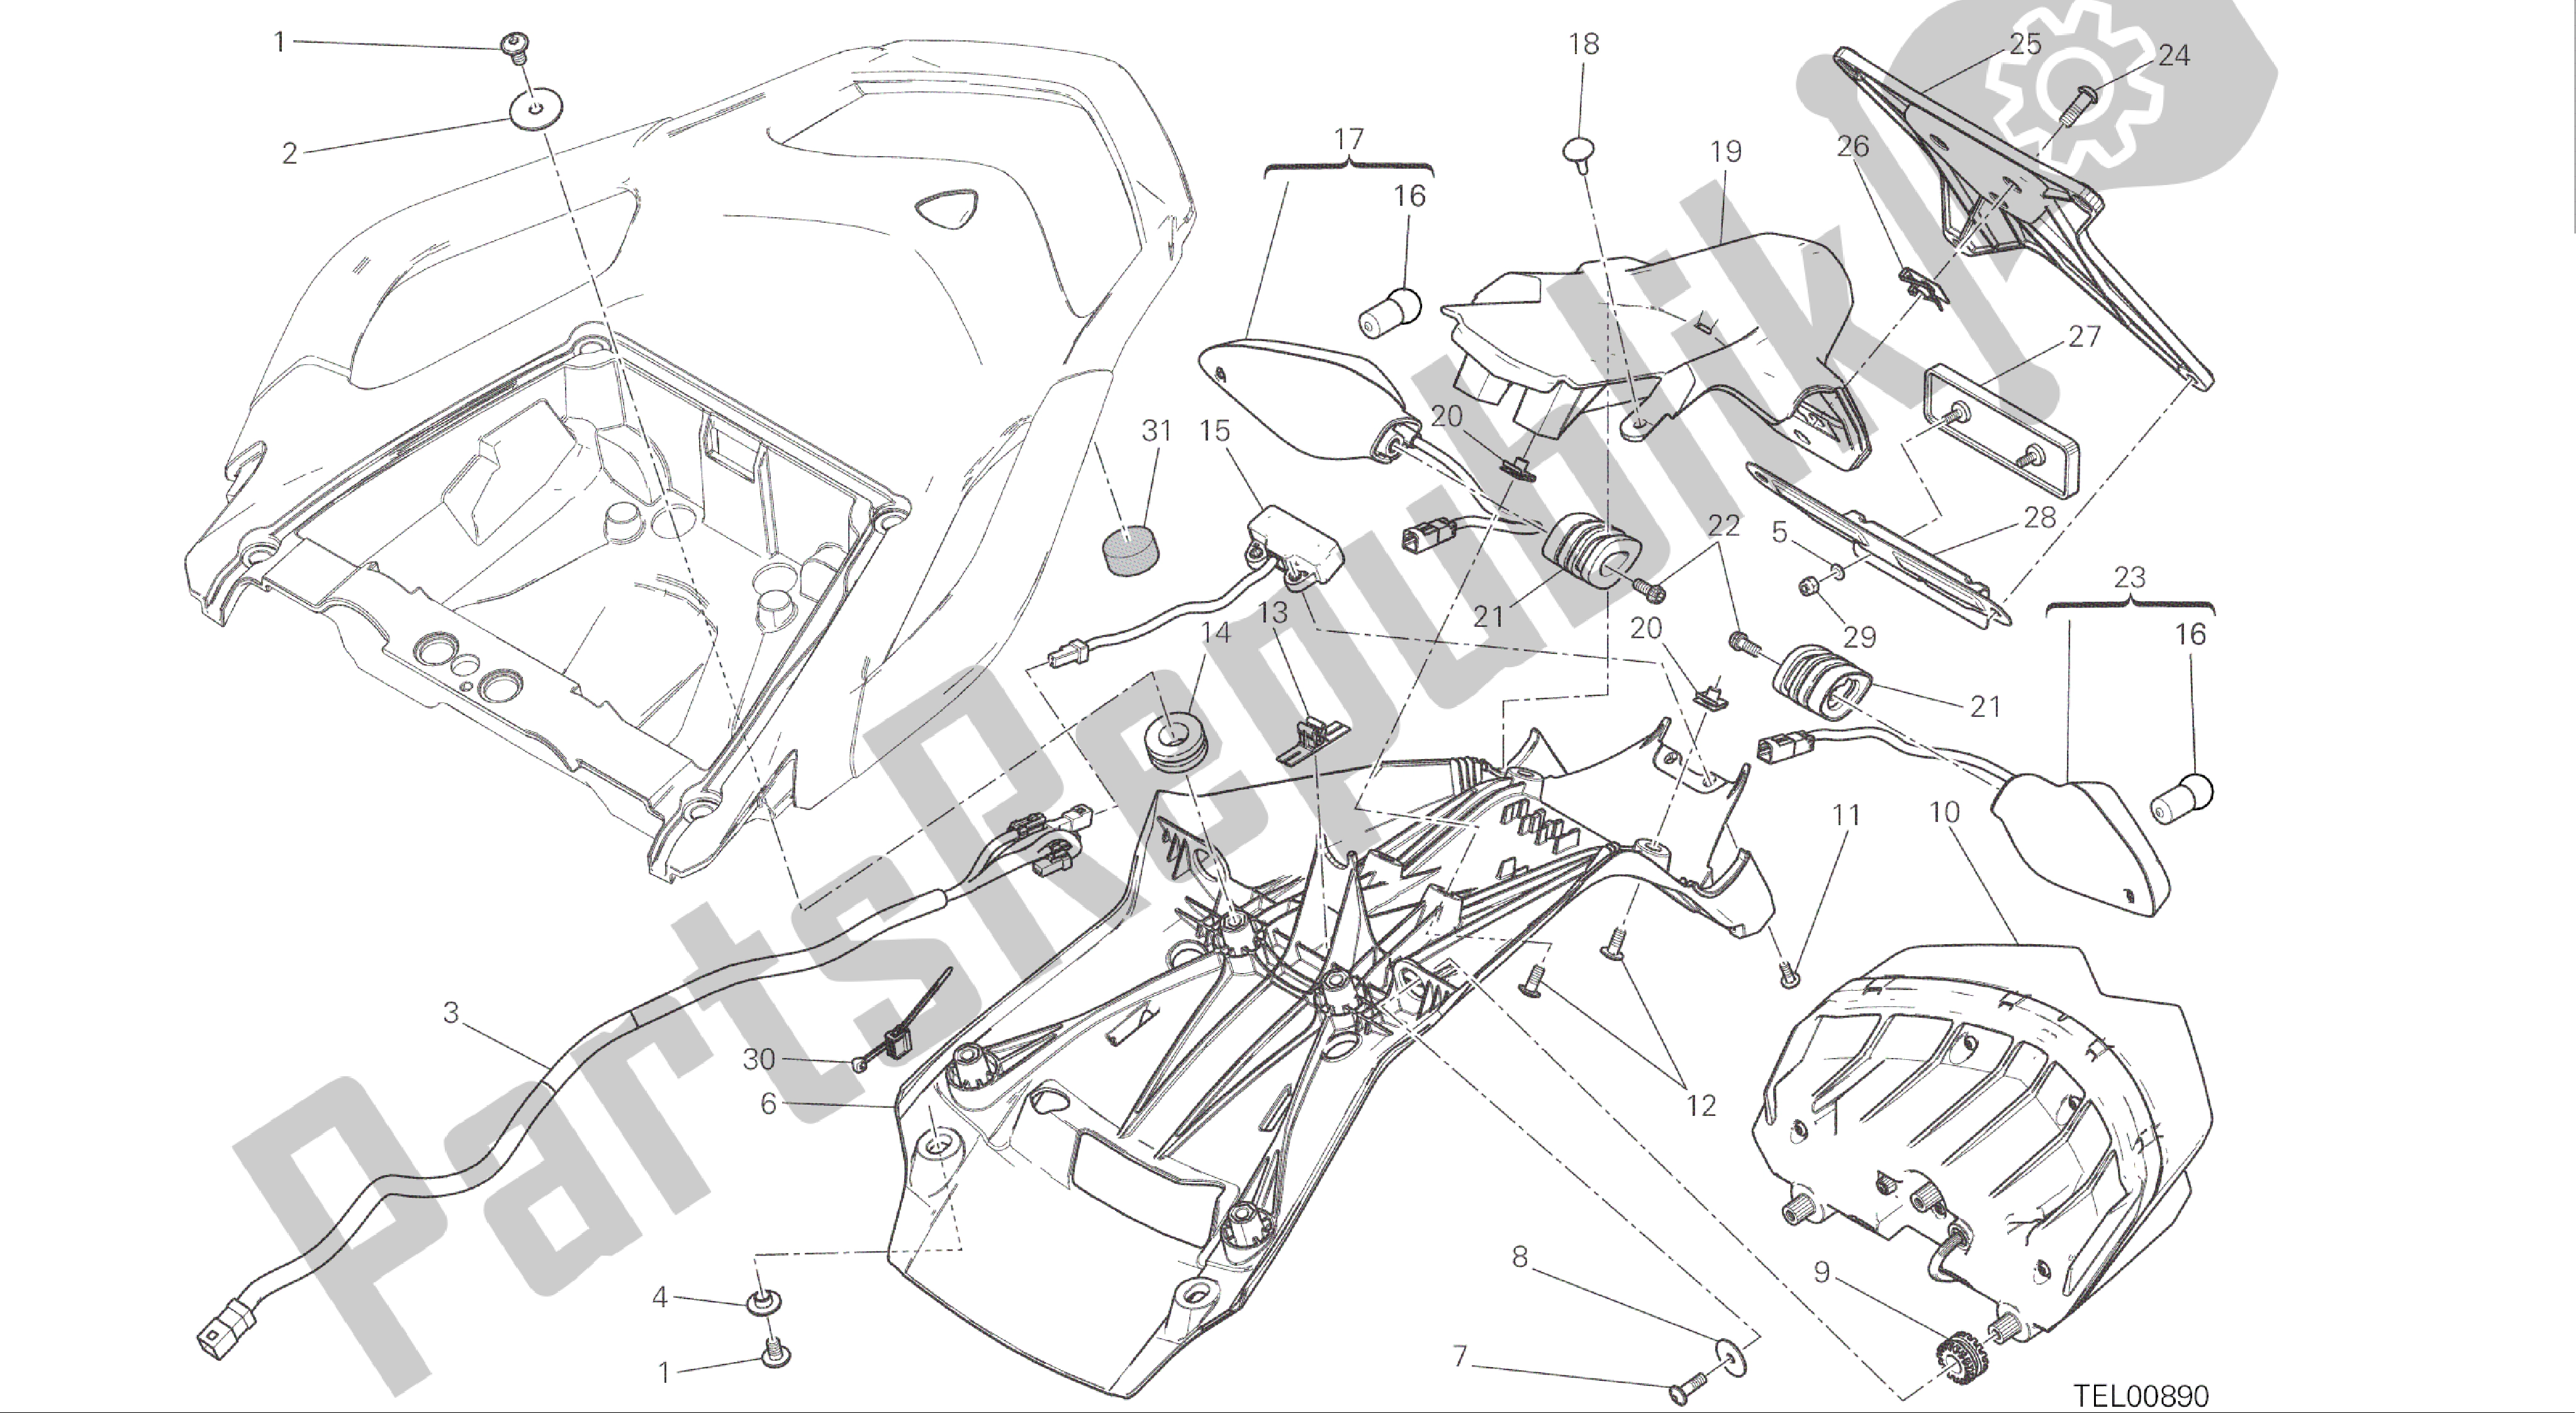 Todas as partes de Desenho 27a - Suporte Da Placa De Matrícula - Luz Traseira [mod: Ms1200s; Xst: Aus, Eur, Fra, Rok] Grupo Elétrico do Ducati Multistrada S ABS 1200 2016